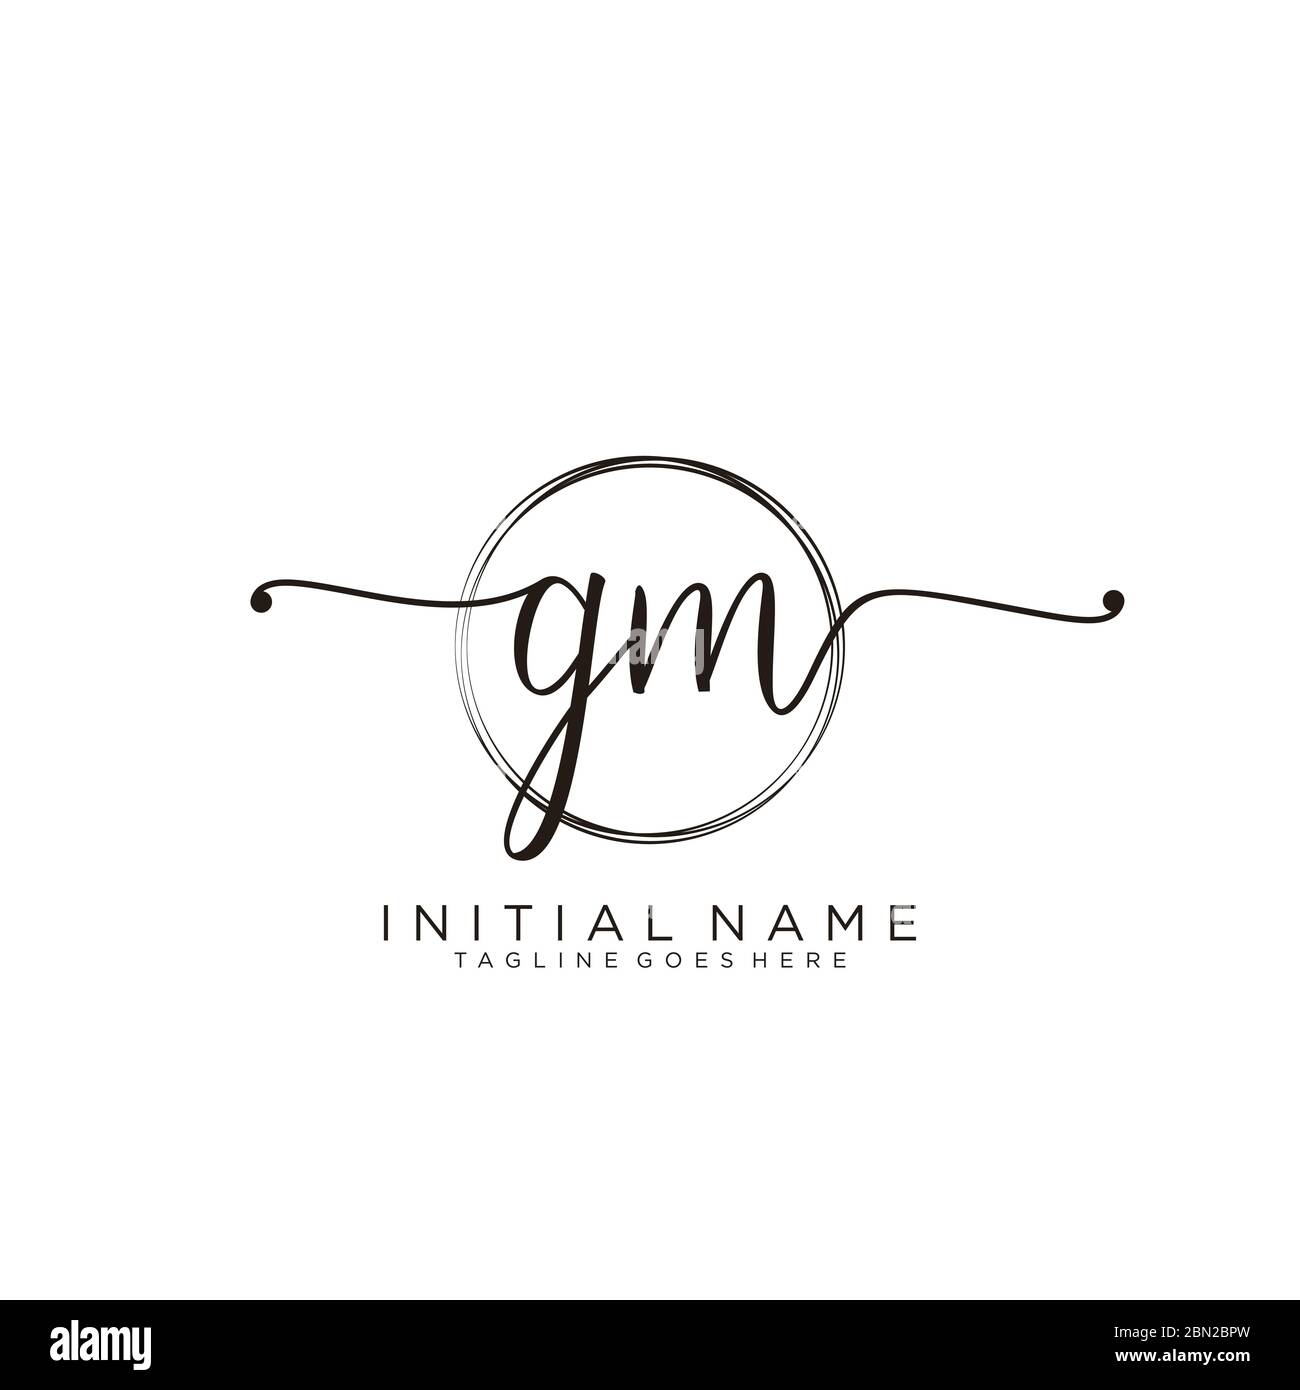 Initial letter gm wedding monogram logo design Vector Image